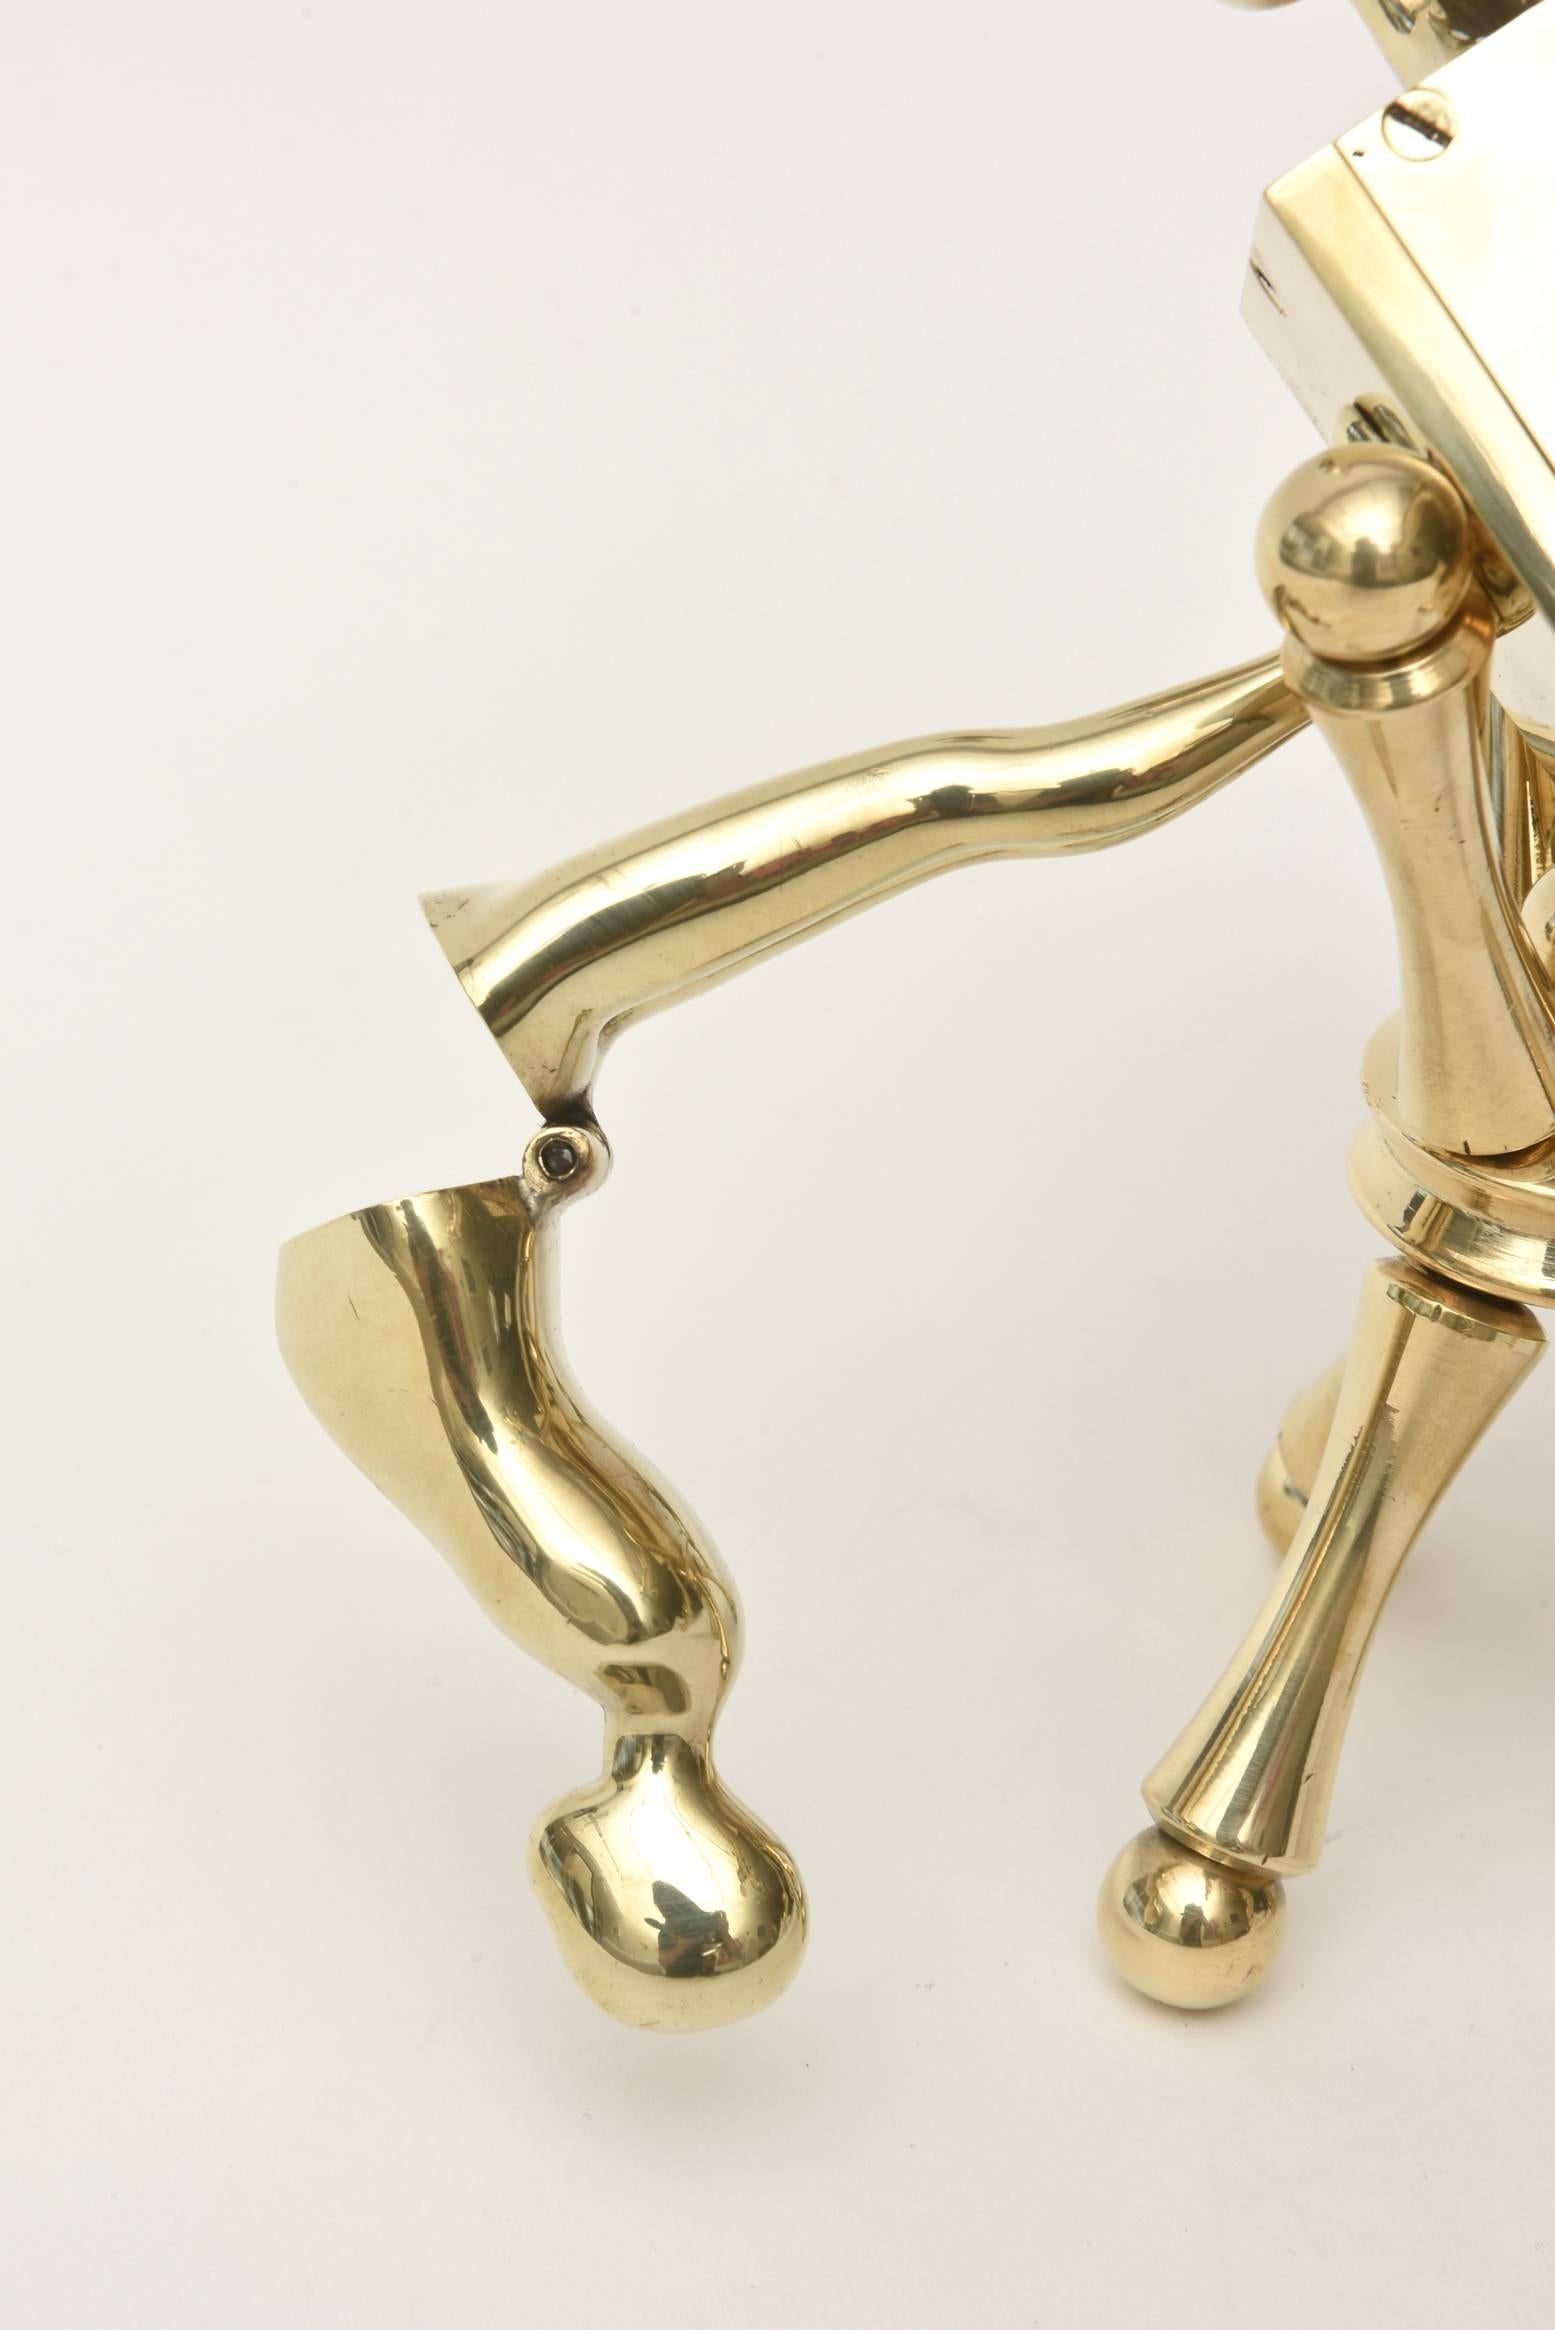 American Ernest Trova Falling Man Brass Sculpture One of a Kind Vintage